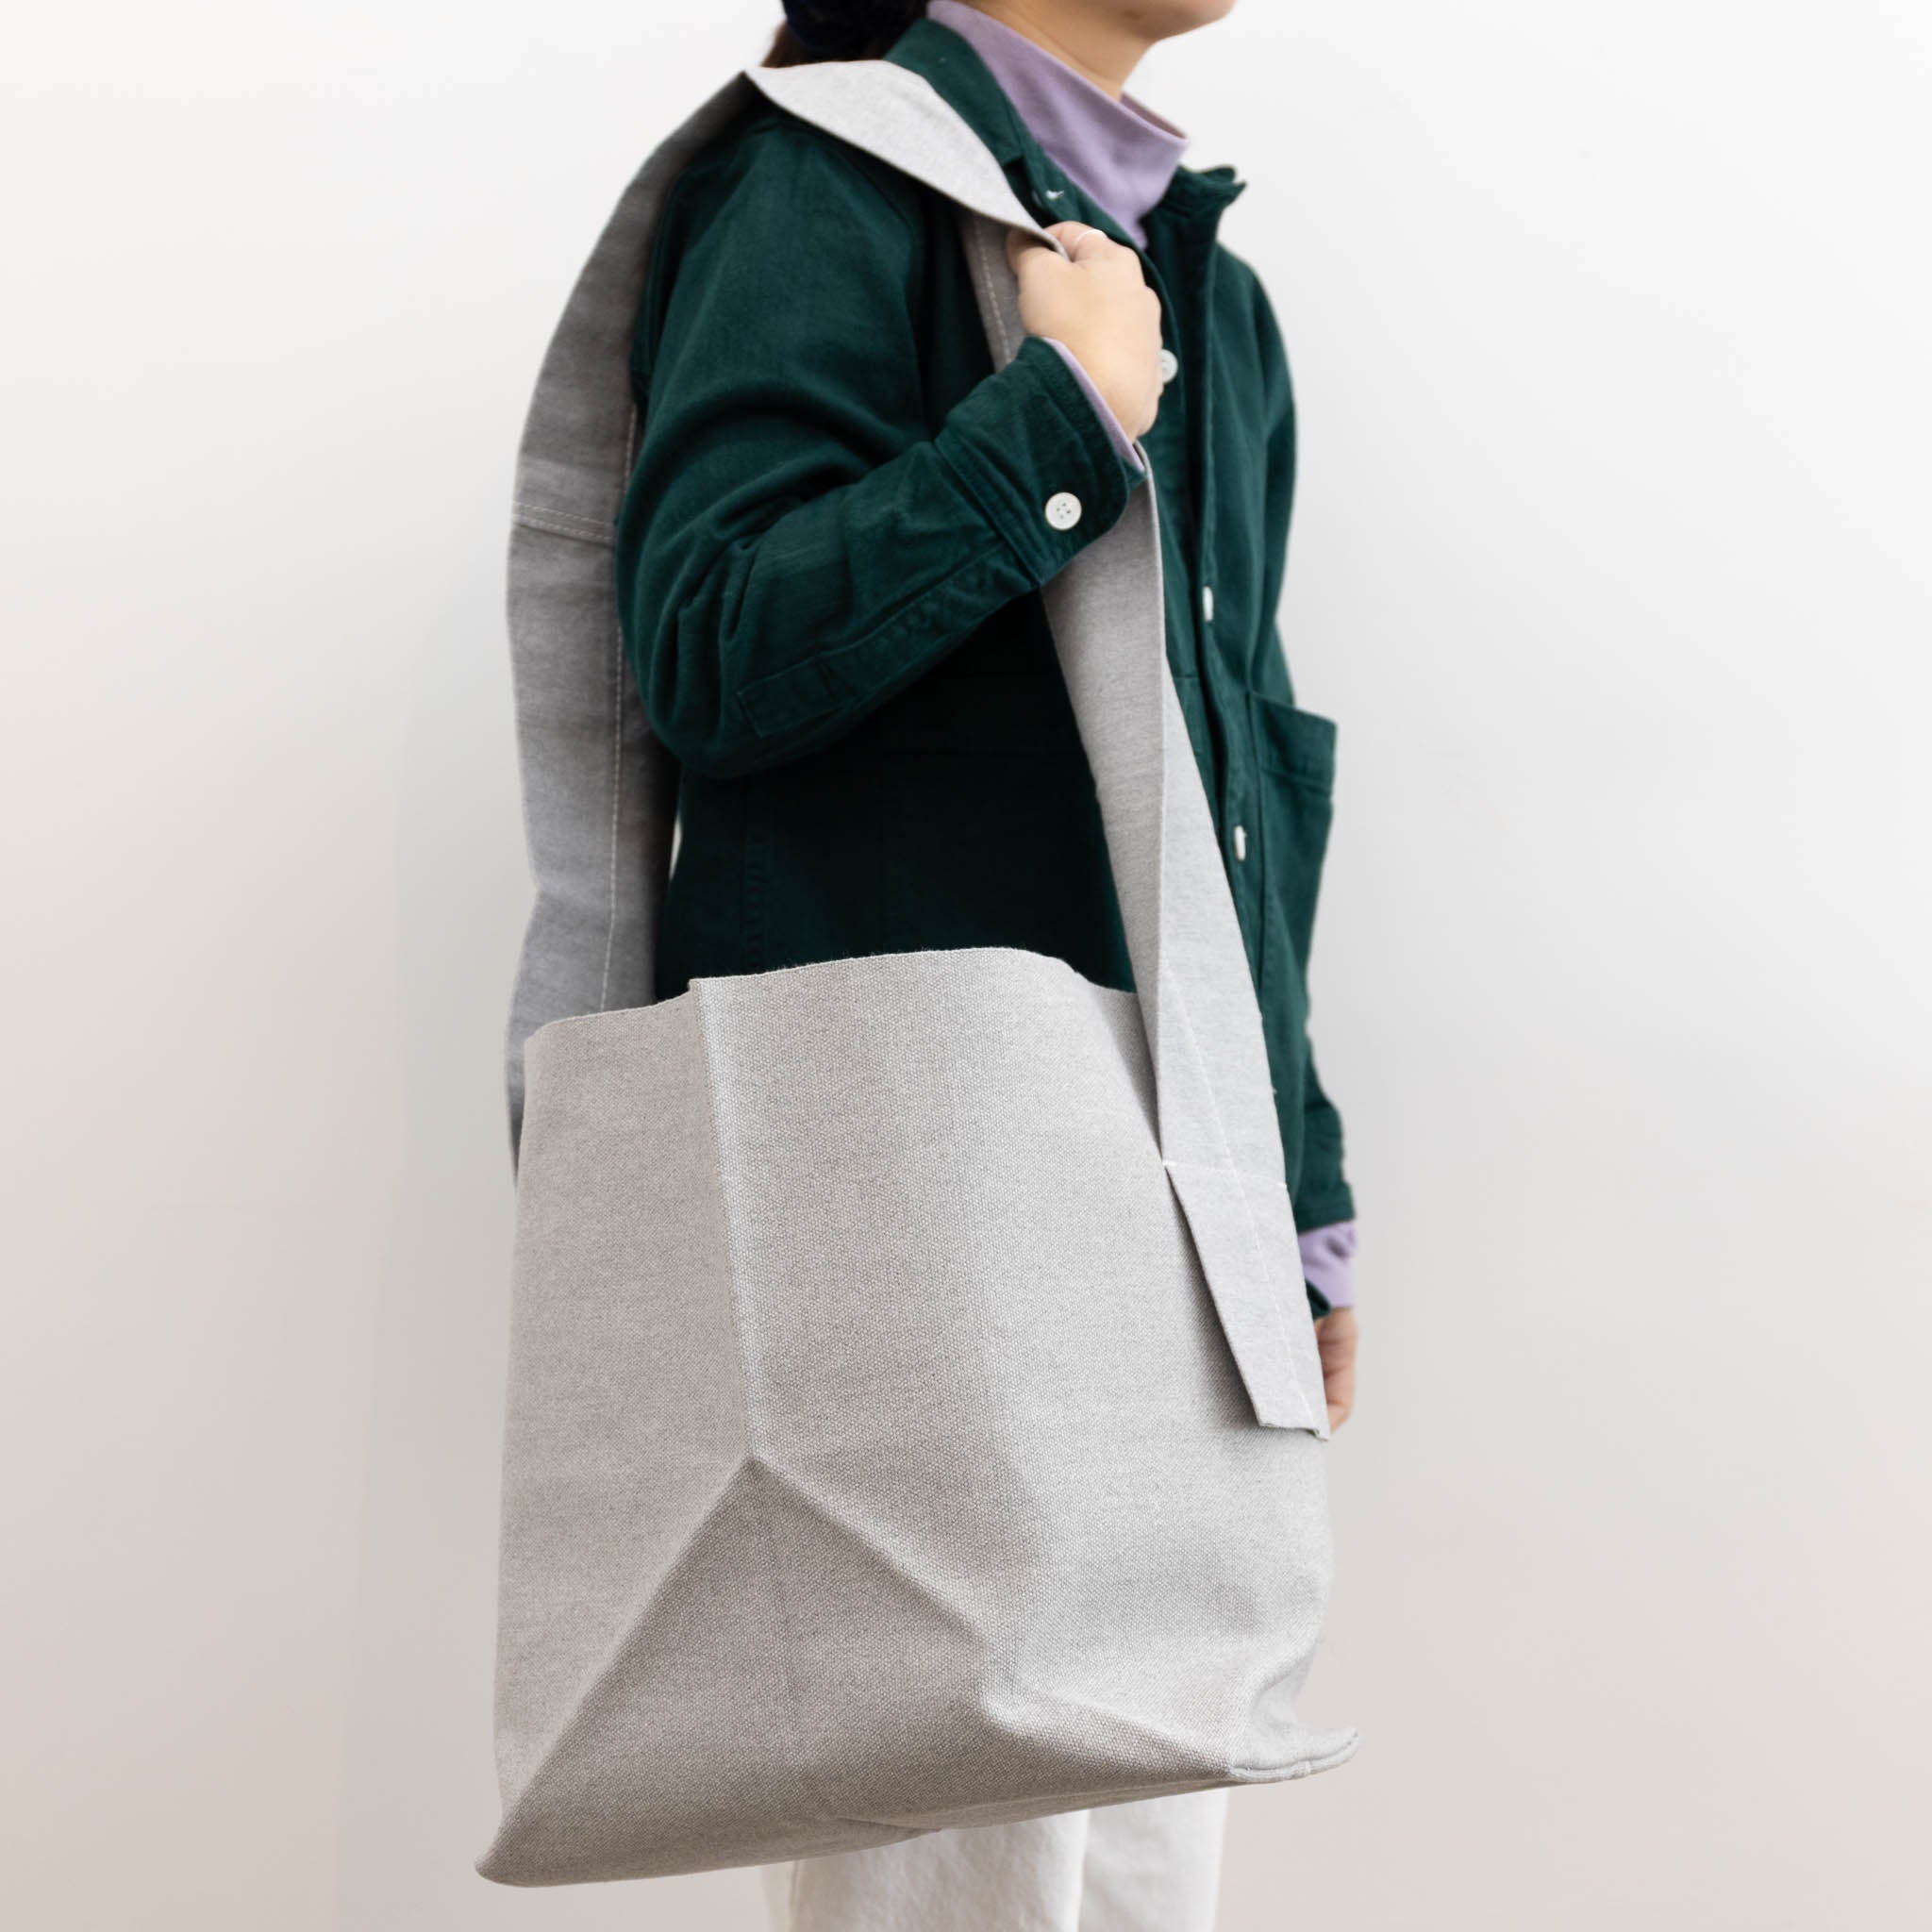 MY. Handmade] Japanese style side backpack / Origami tote bag ~ 喵